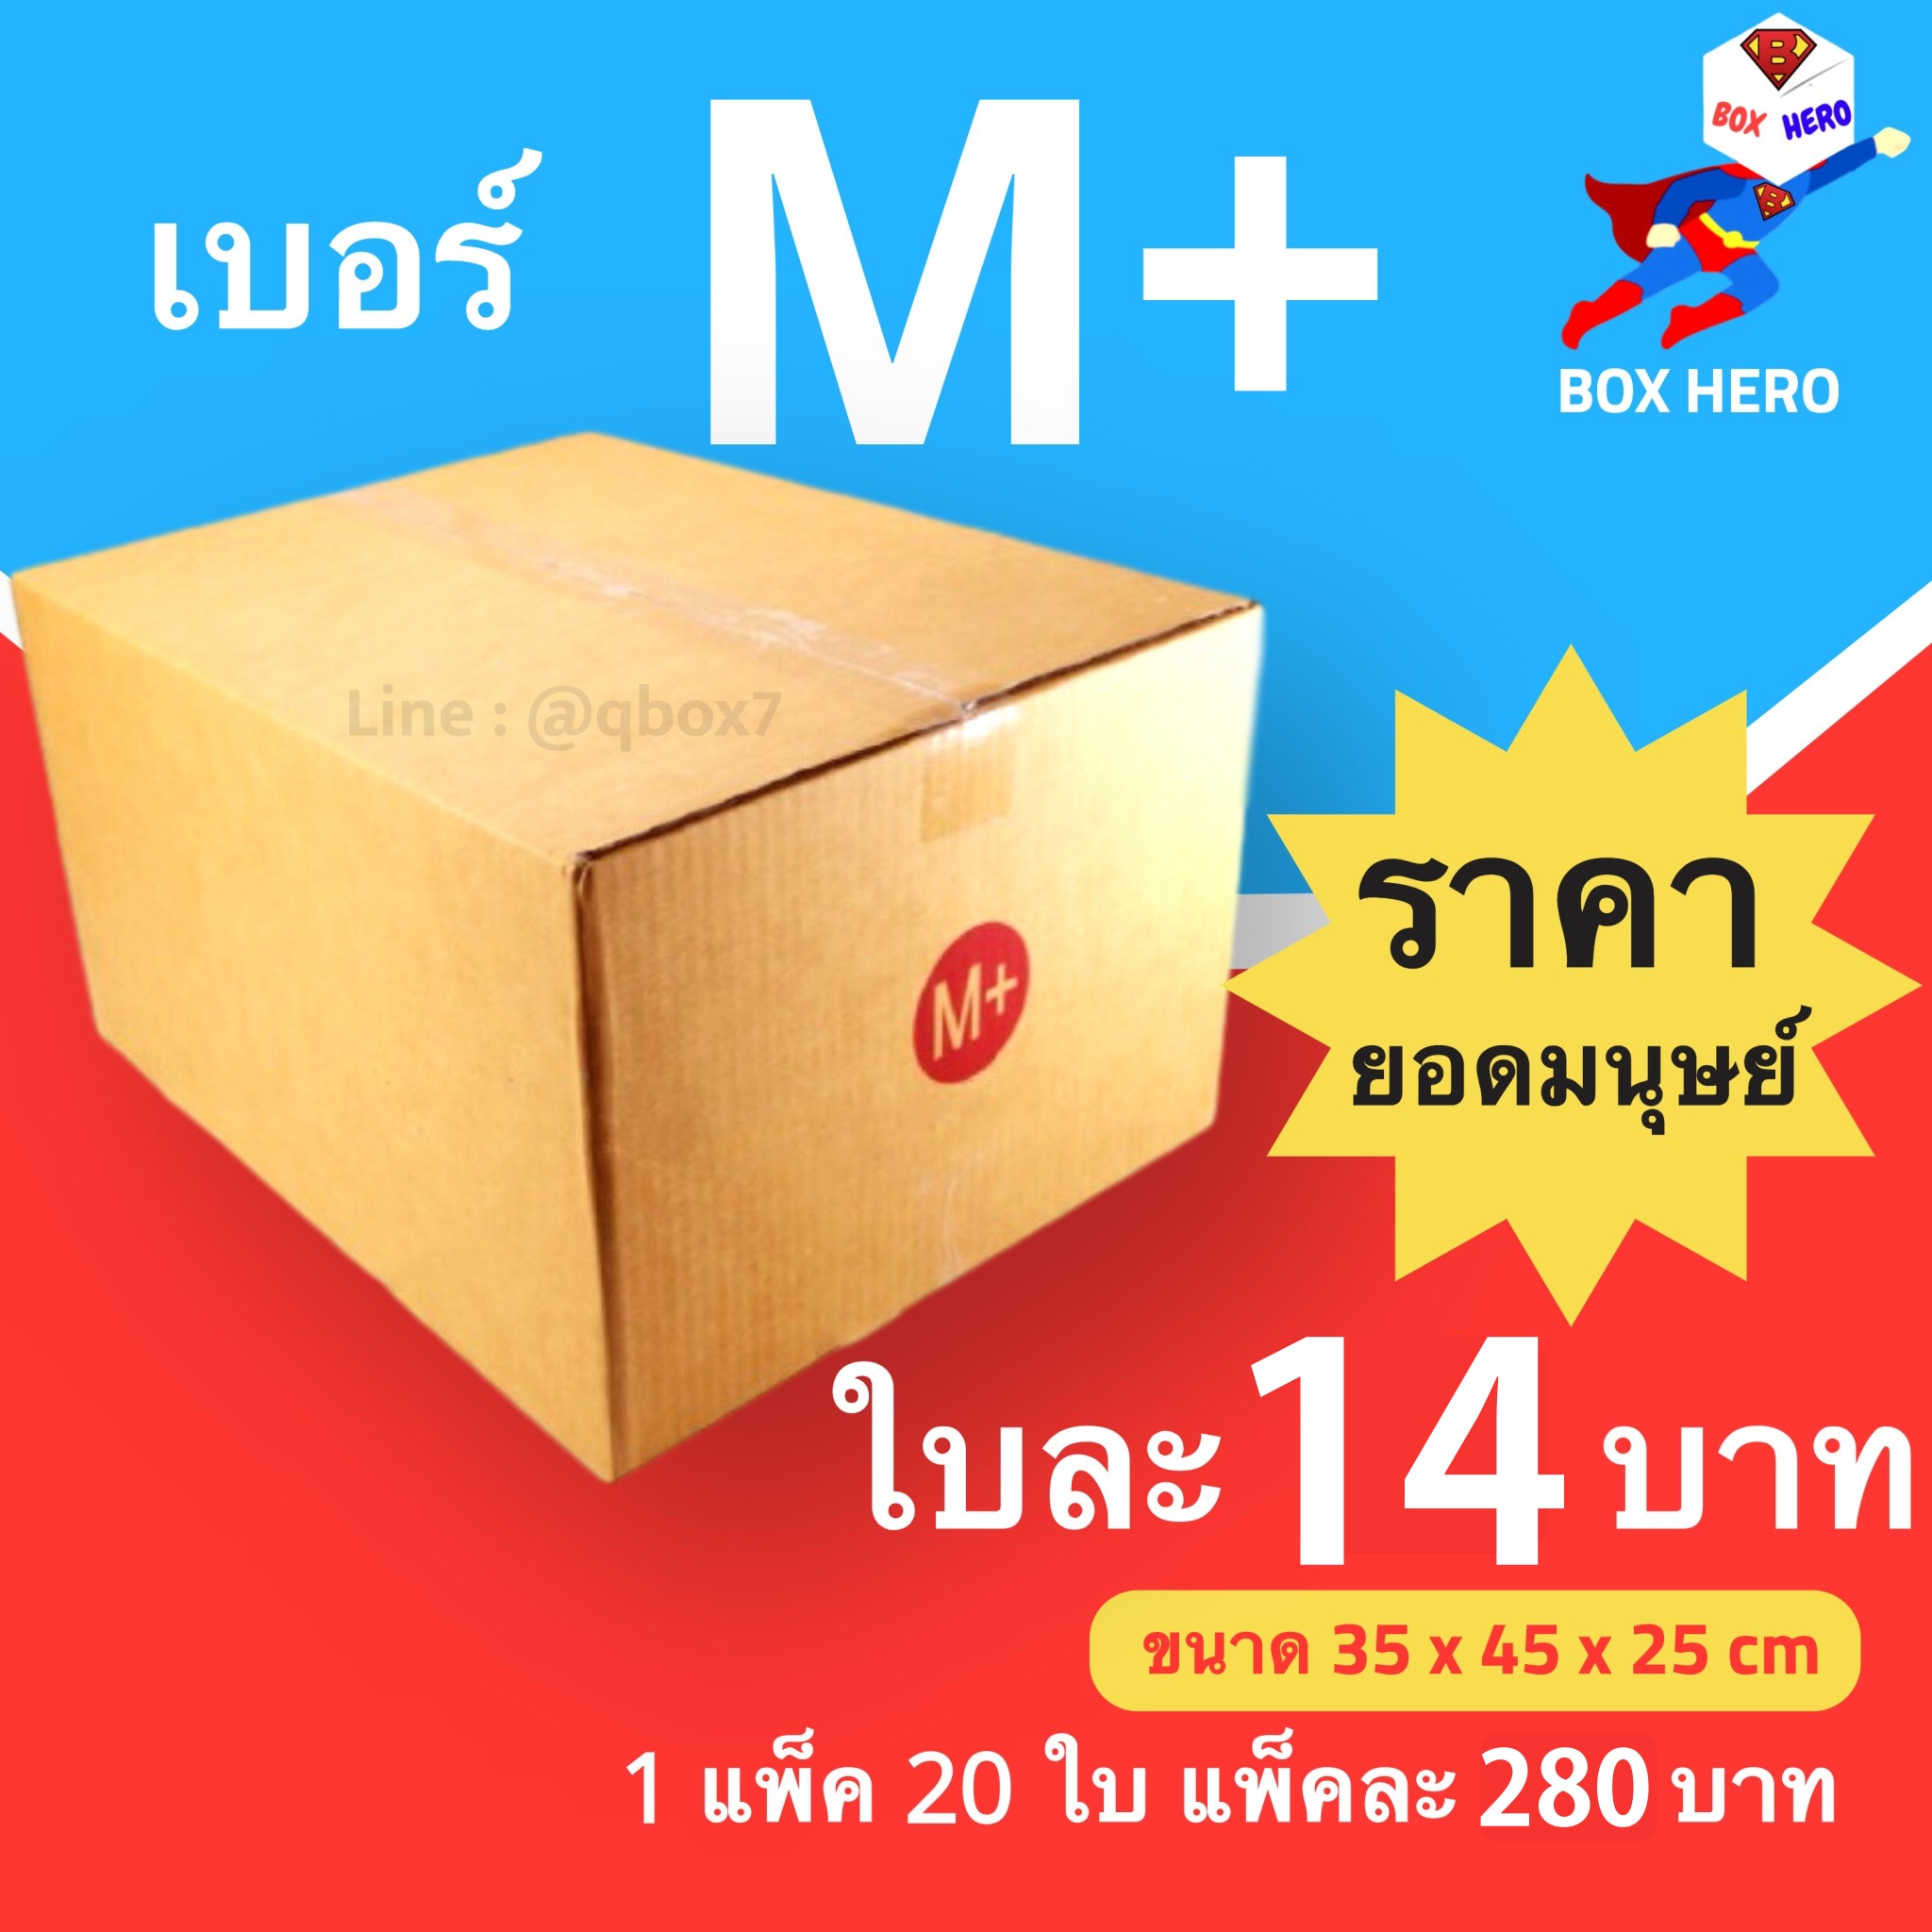 BoxHero กล่องไปรษณีย์เบอร์ M+ มีพิมพ์จ่าหน้า กล่องพัสดุ (20 ใบ 280 บาท)